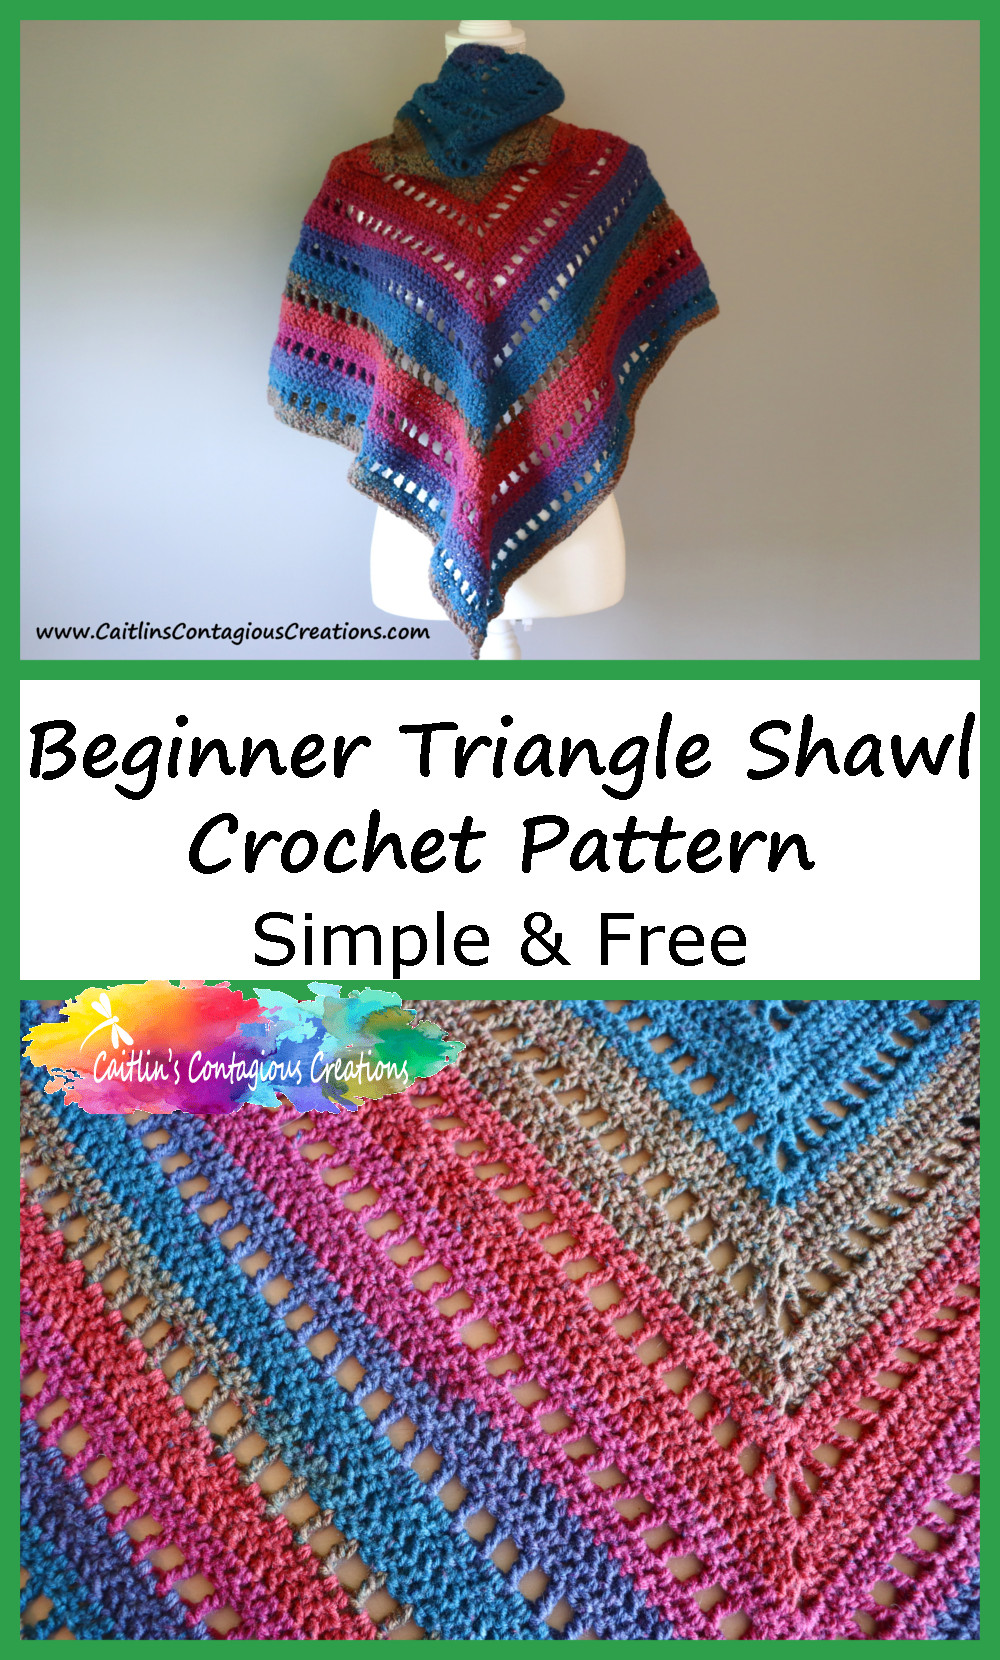 beginner triangle Shawl crochet pattern pinterest image 01